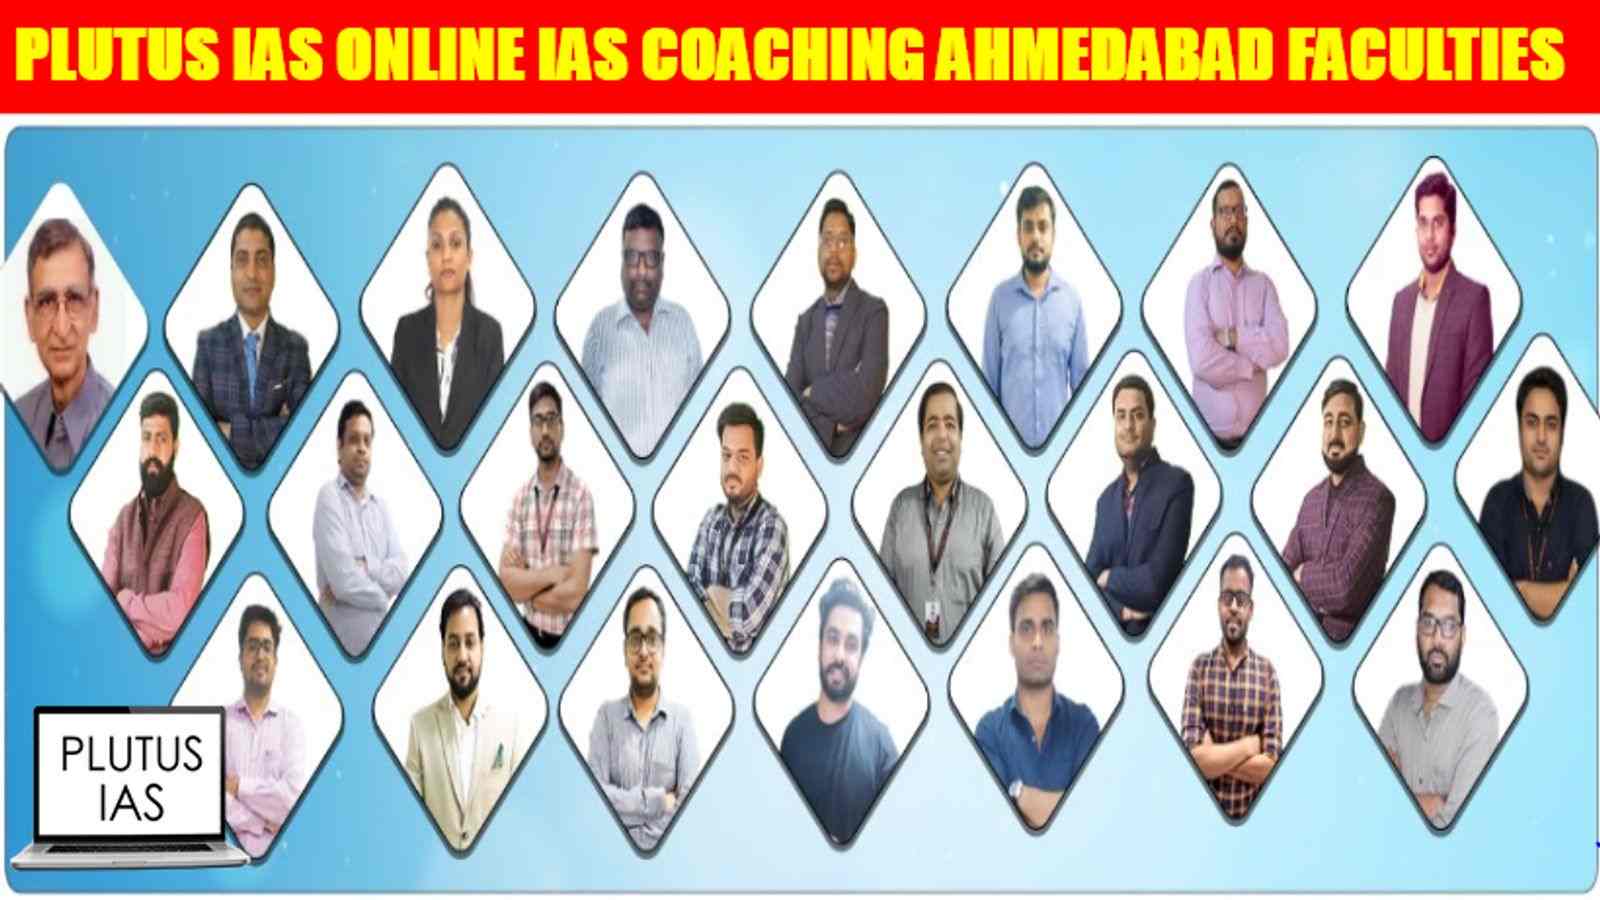 Plutus IAS Online Coaching Ahmedabad Faculties